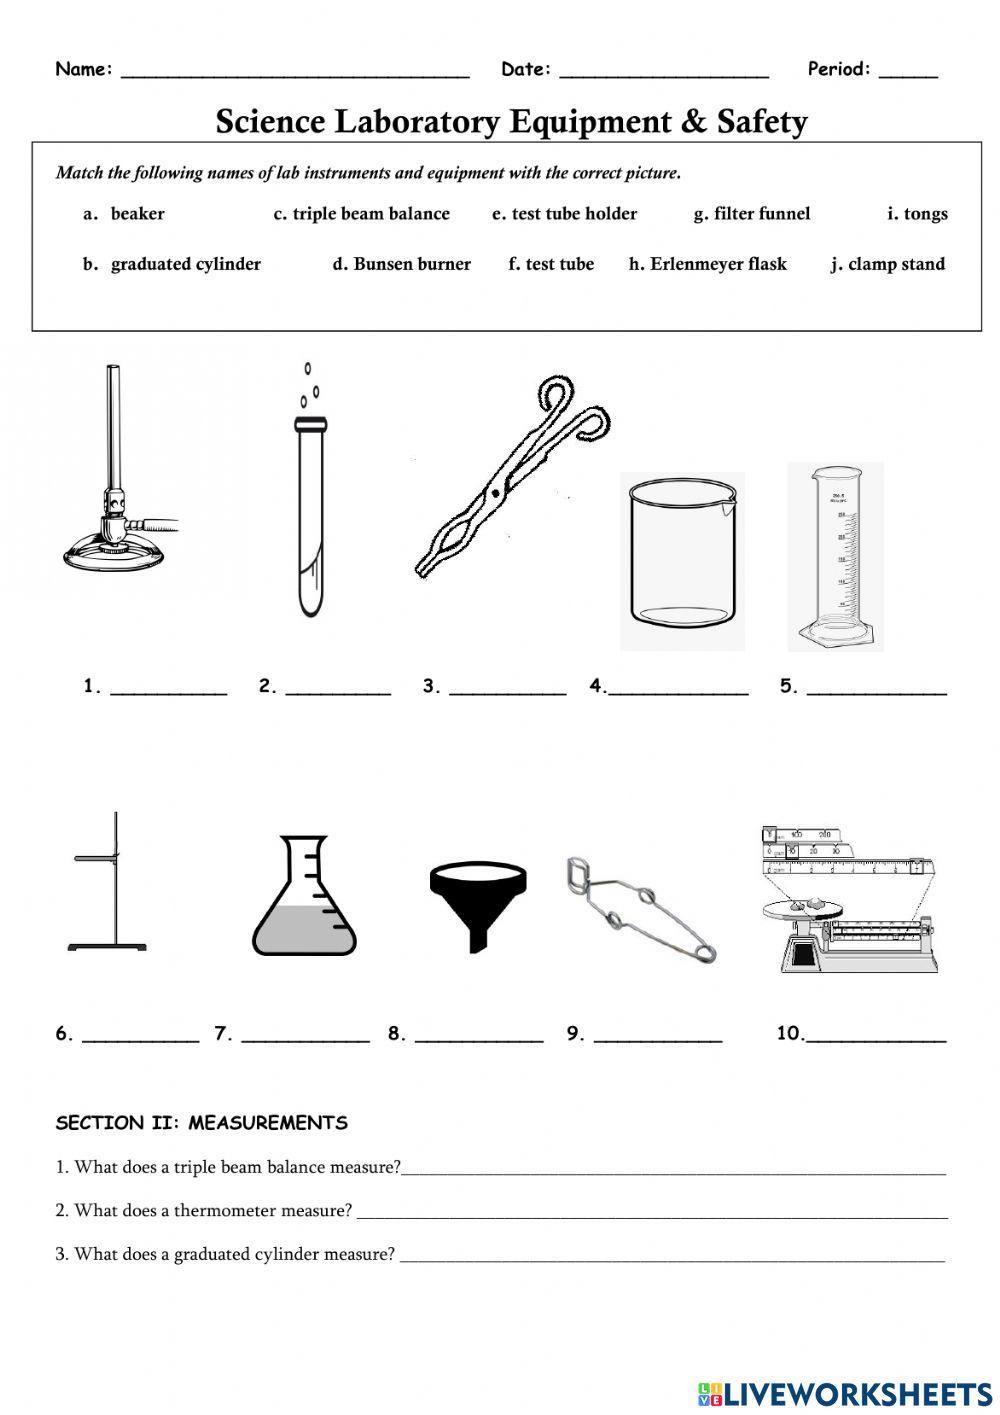 Laboratory Equipment & Safety worksheet | Live Worksheets